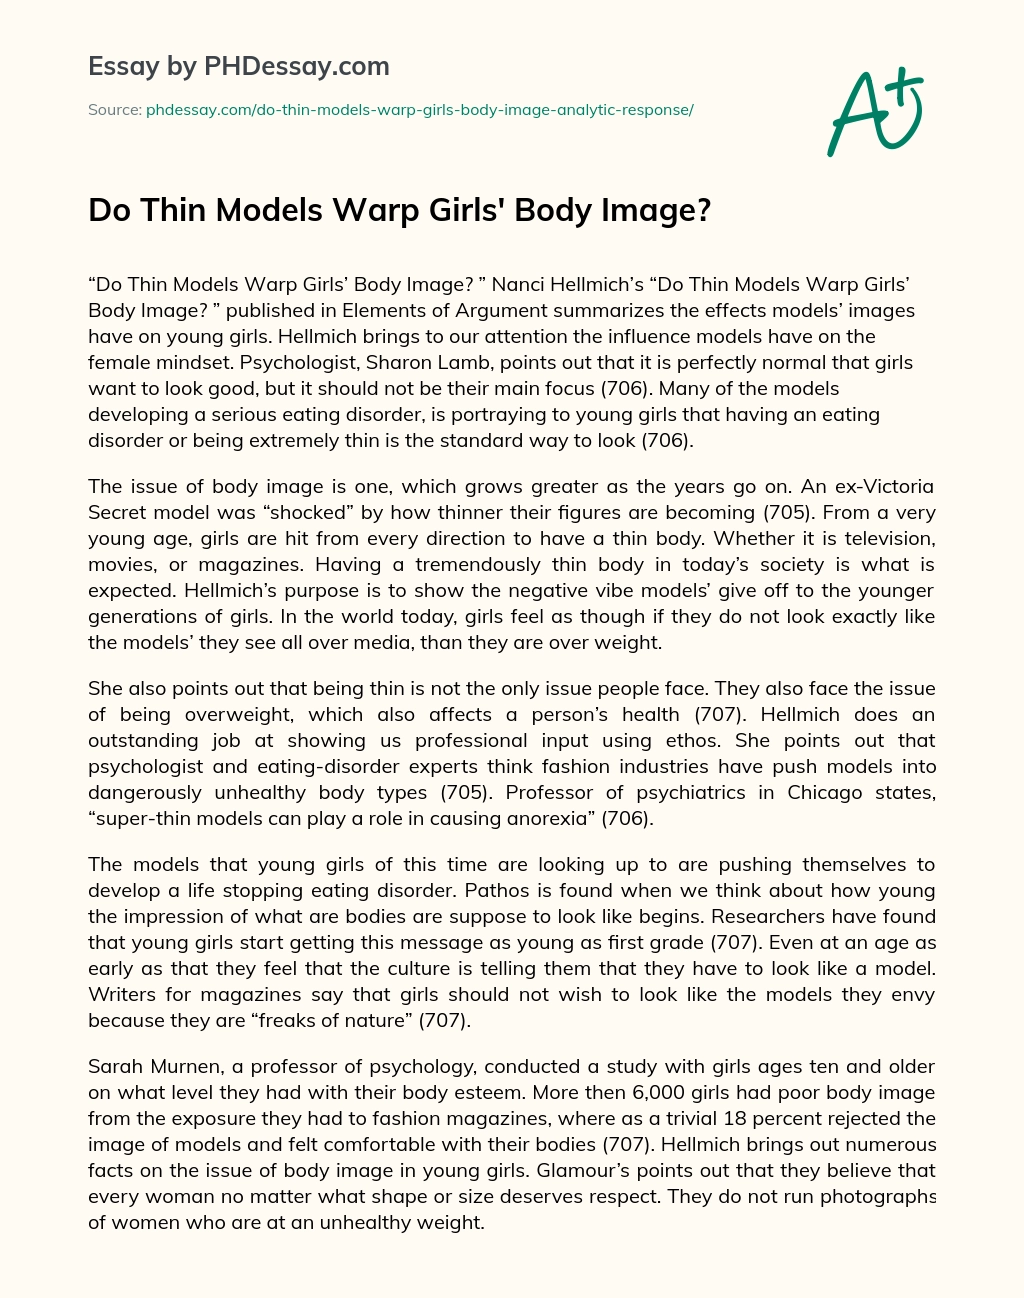 Do Thin Models Warp Girls’ Body Image? essay